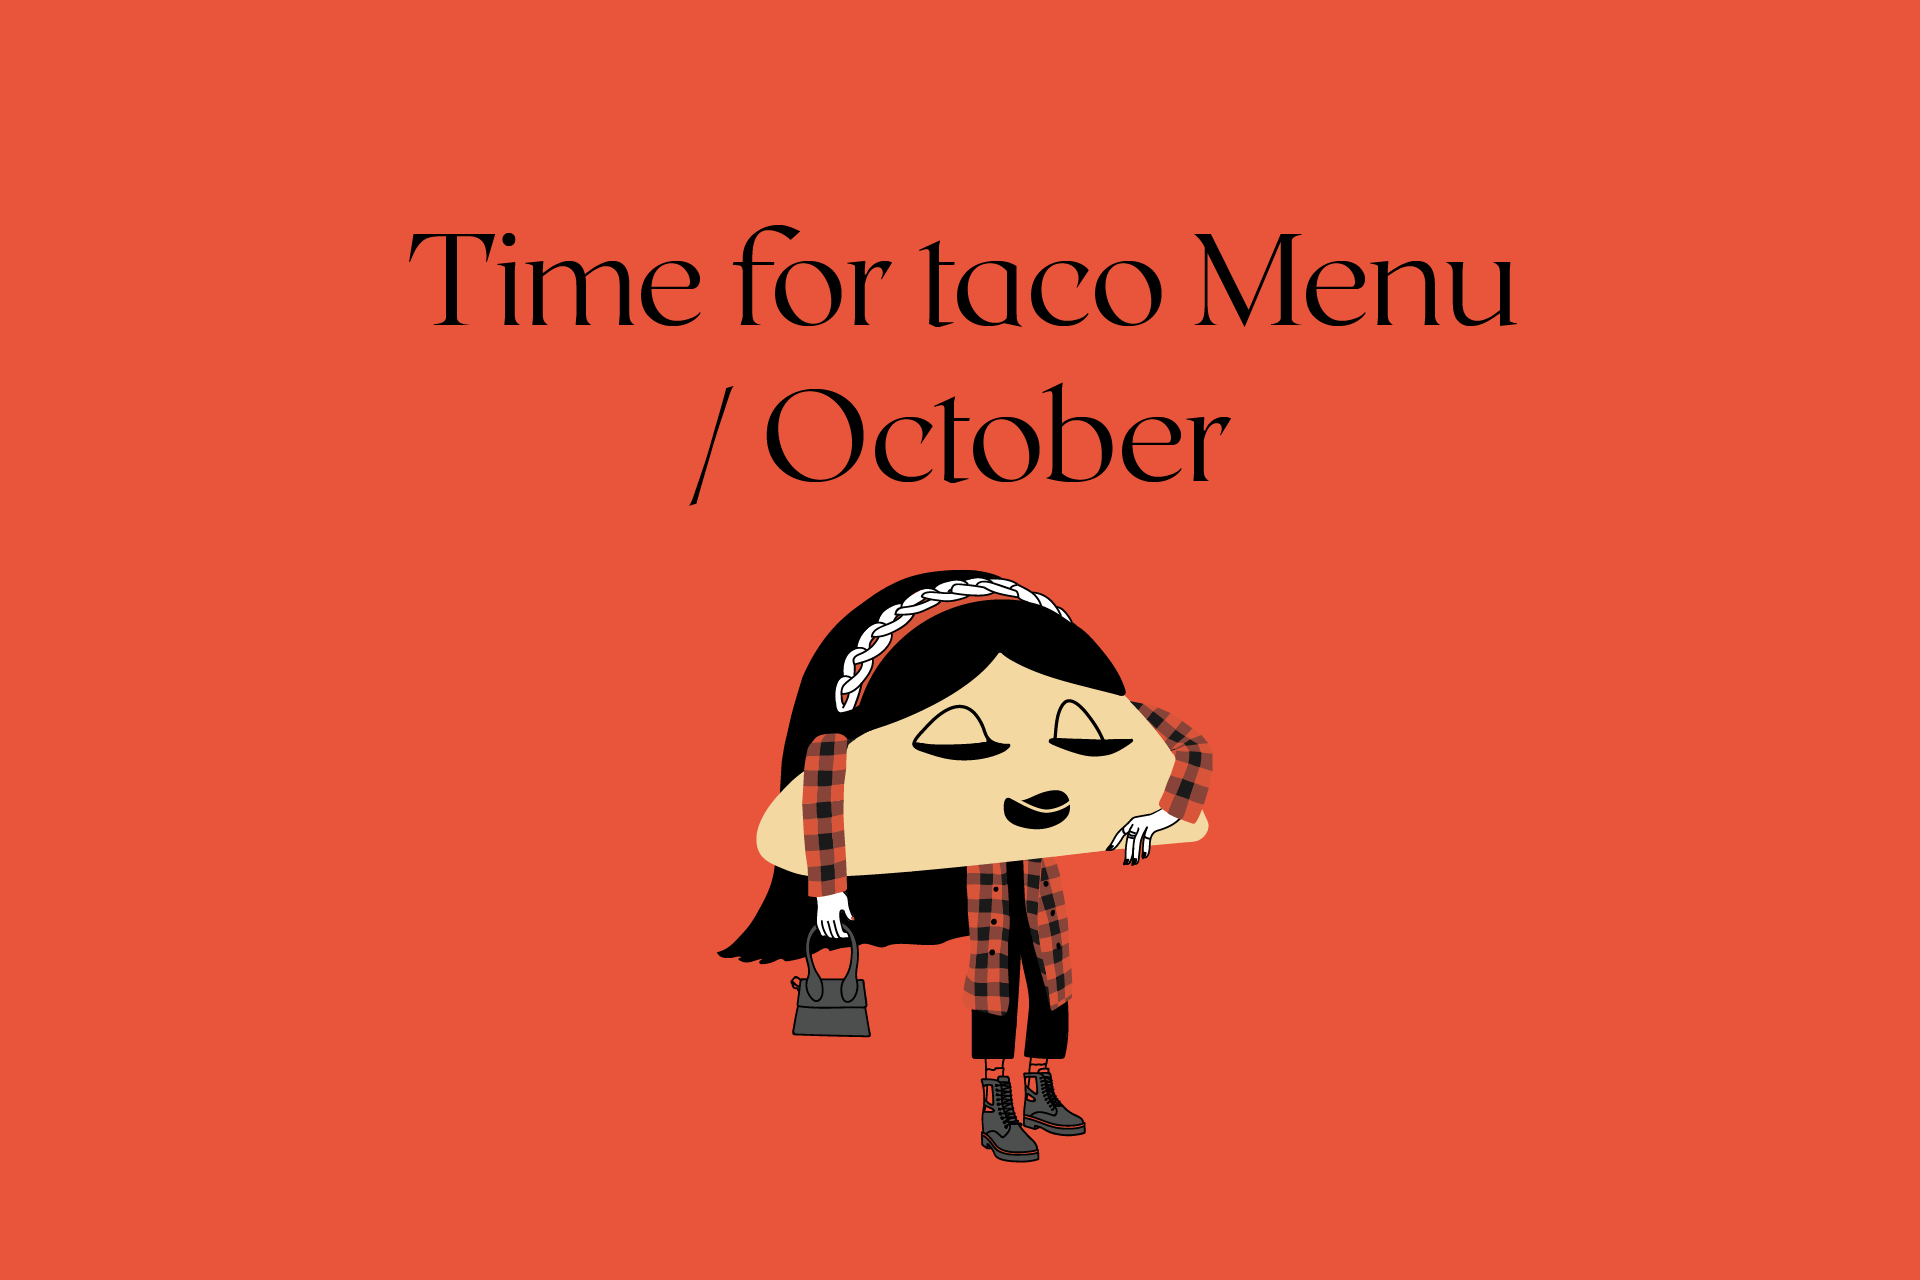 Time for taco Menu / October